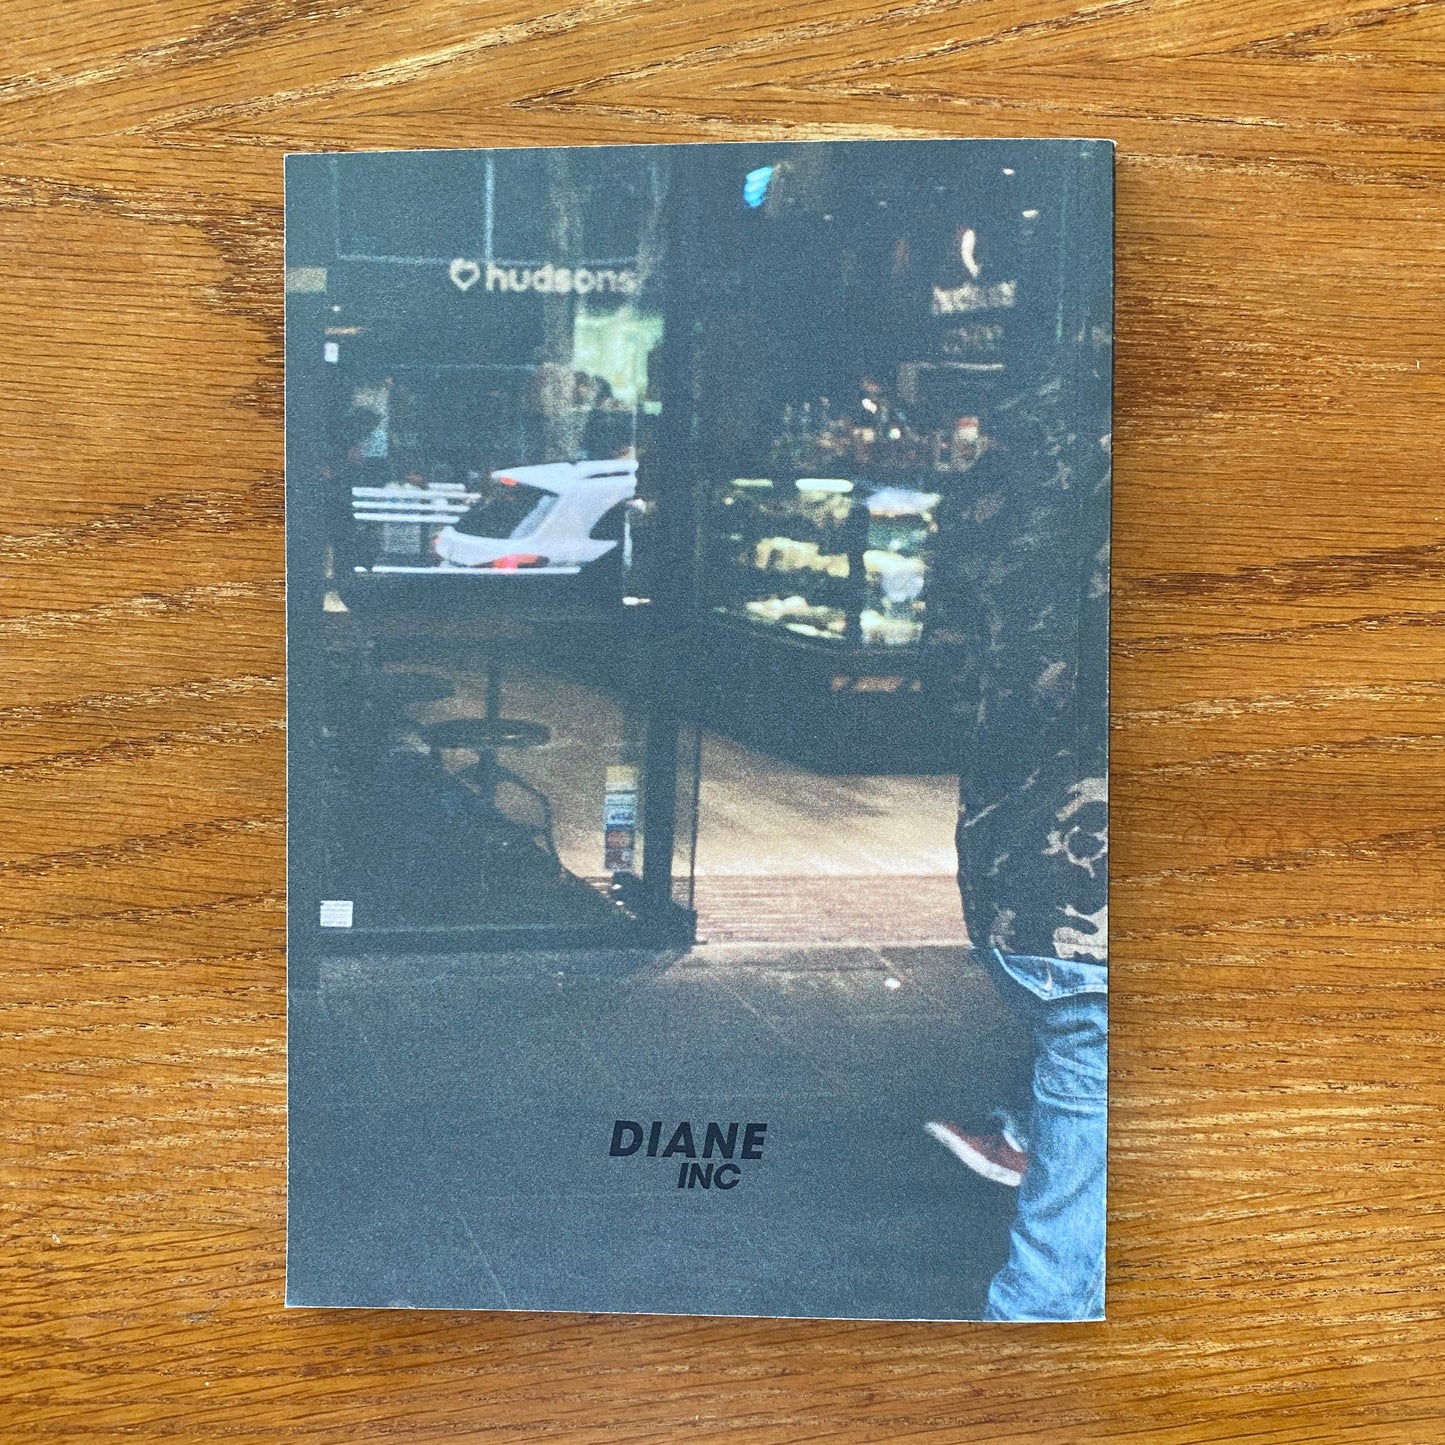 Meet & Greet - Diane Inc